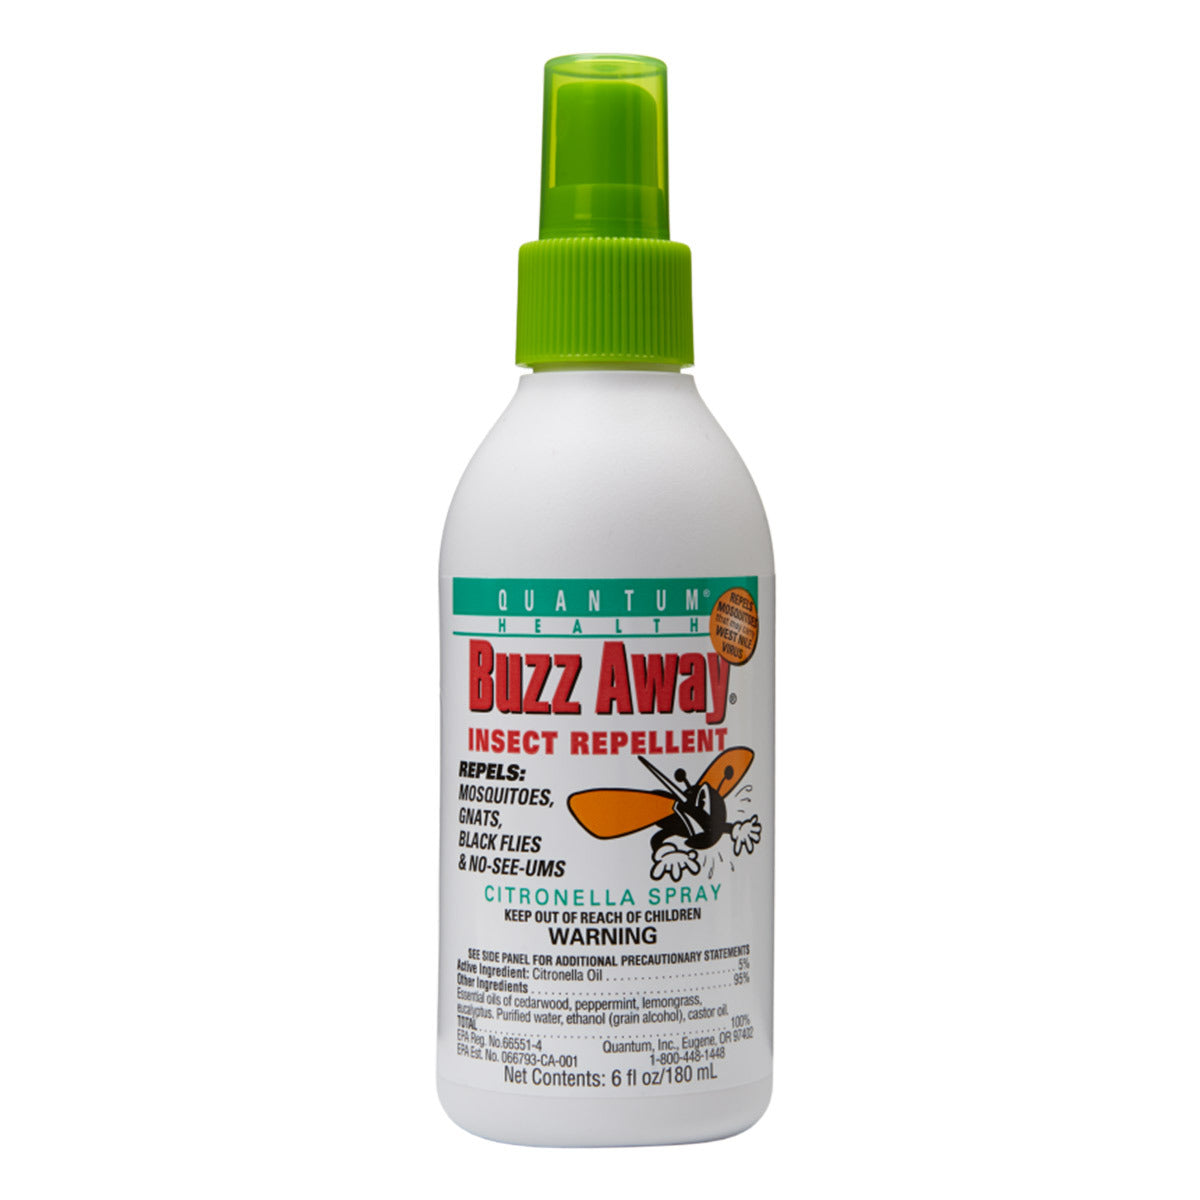 Primary image of Buzz Away Outdoor Spray